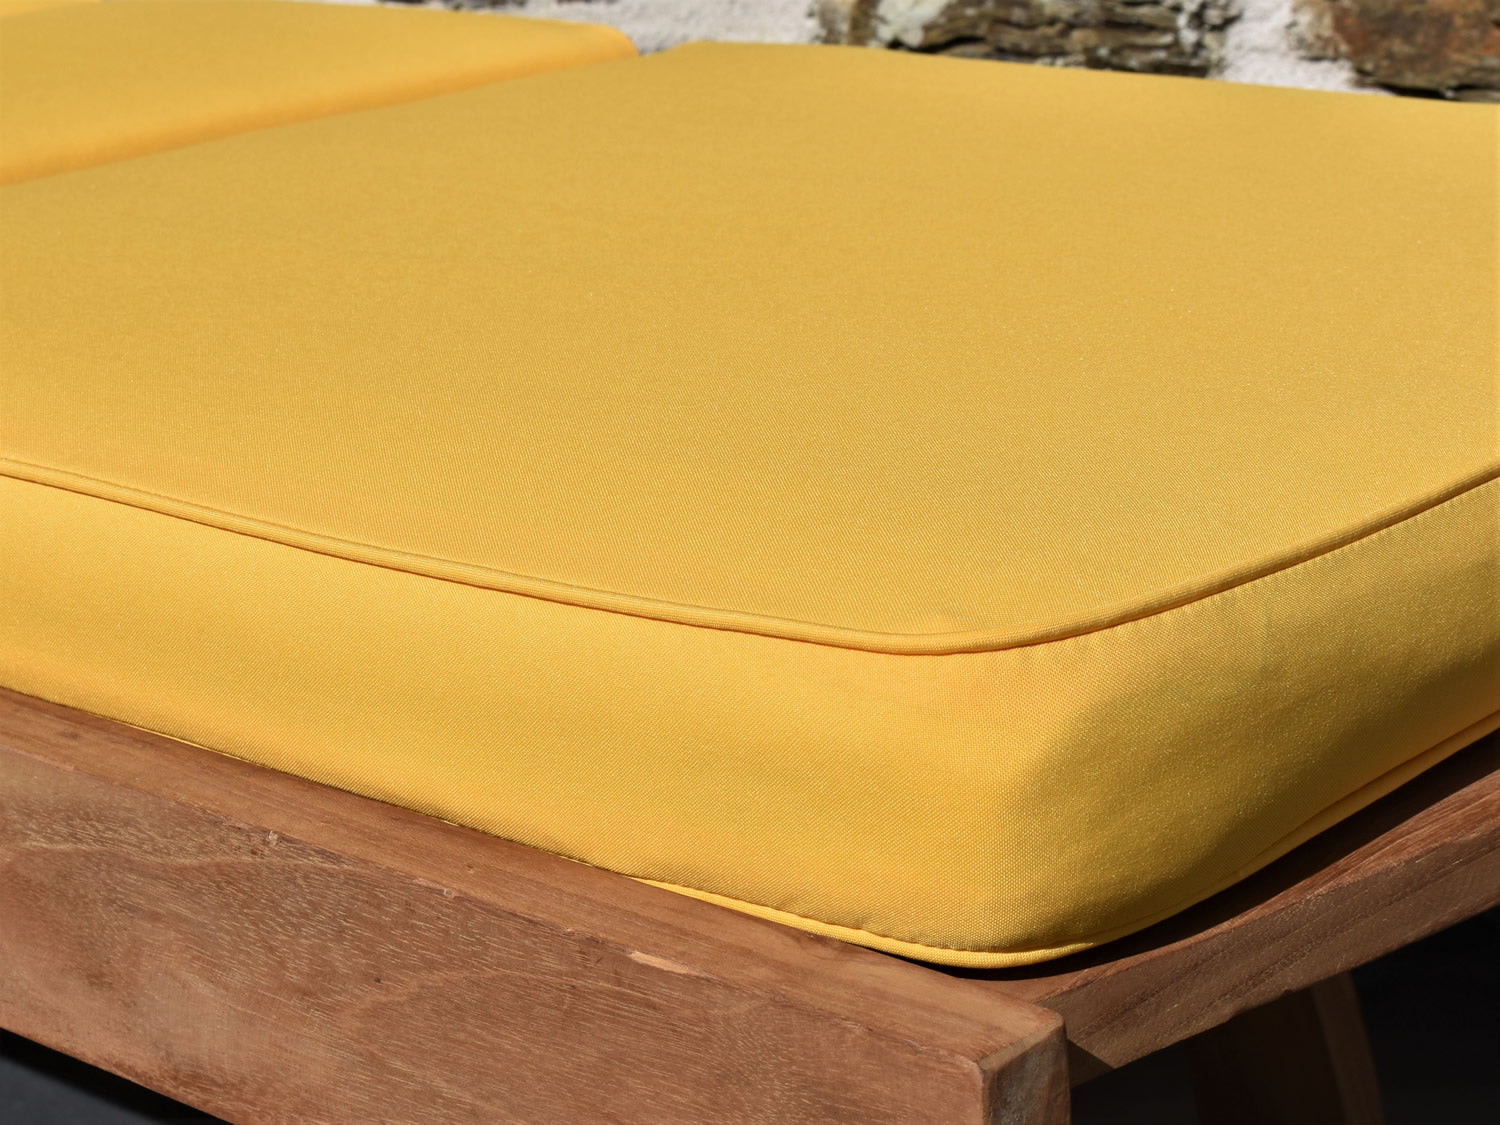 close-up fabric detail of yellow garden sunlounger cushion